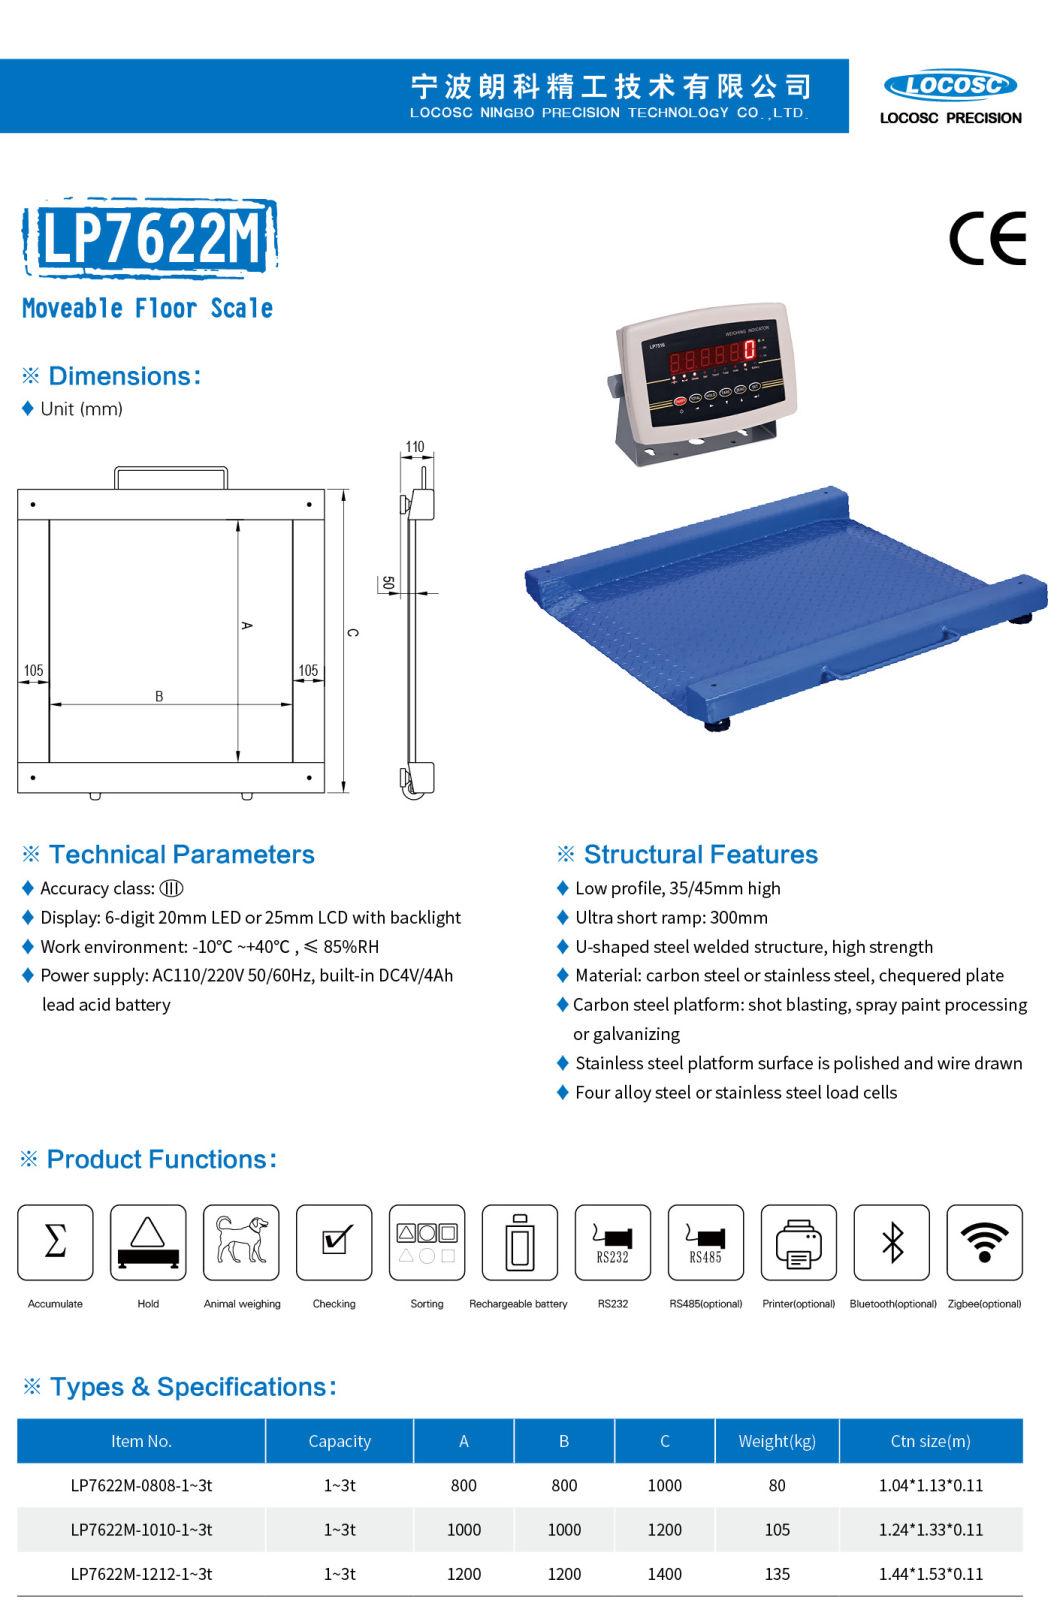 Ningbo Factory Price Electronic Digital Platform Weighing Floor Scale with Ramp